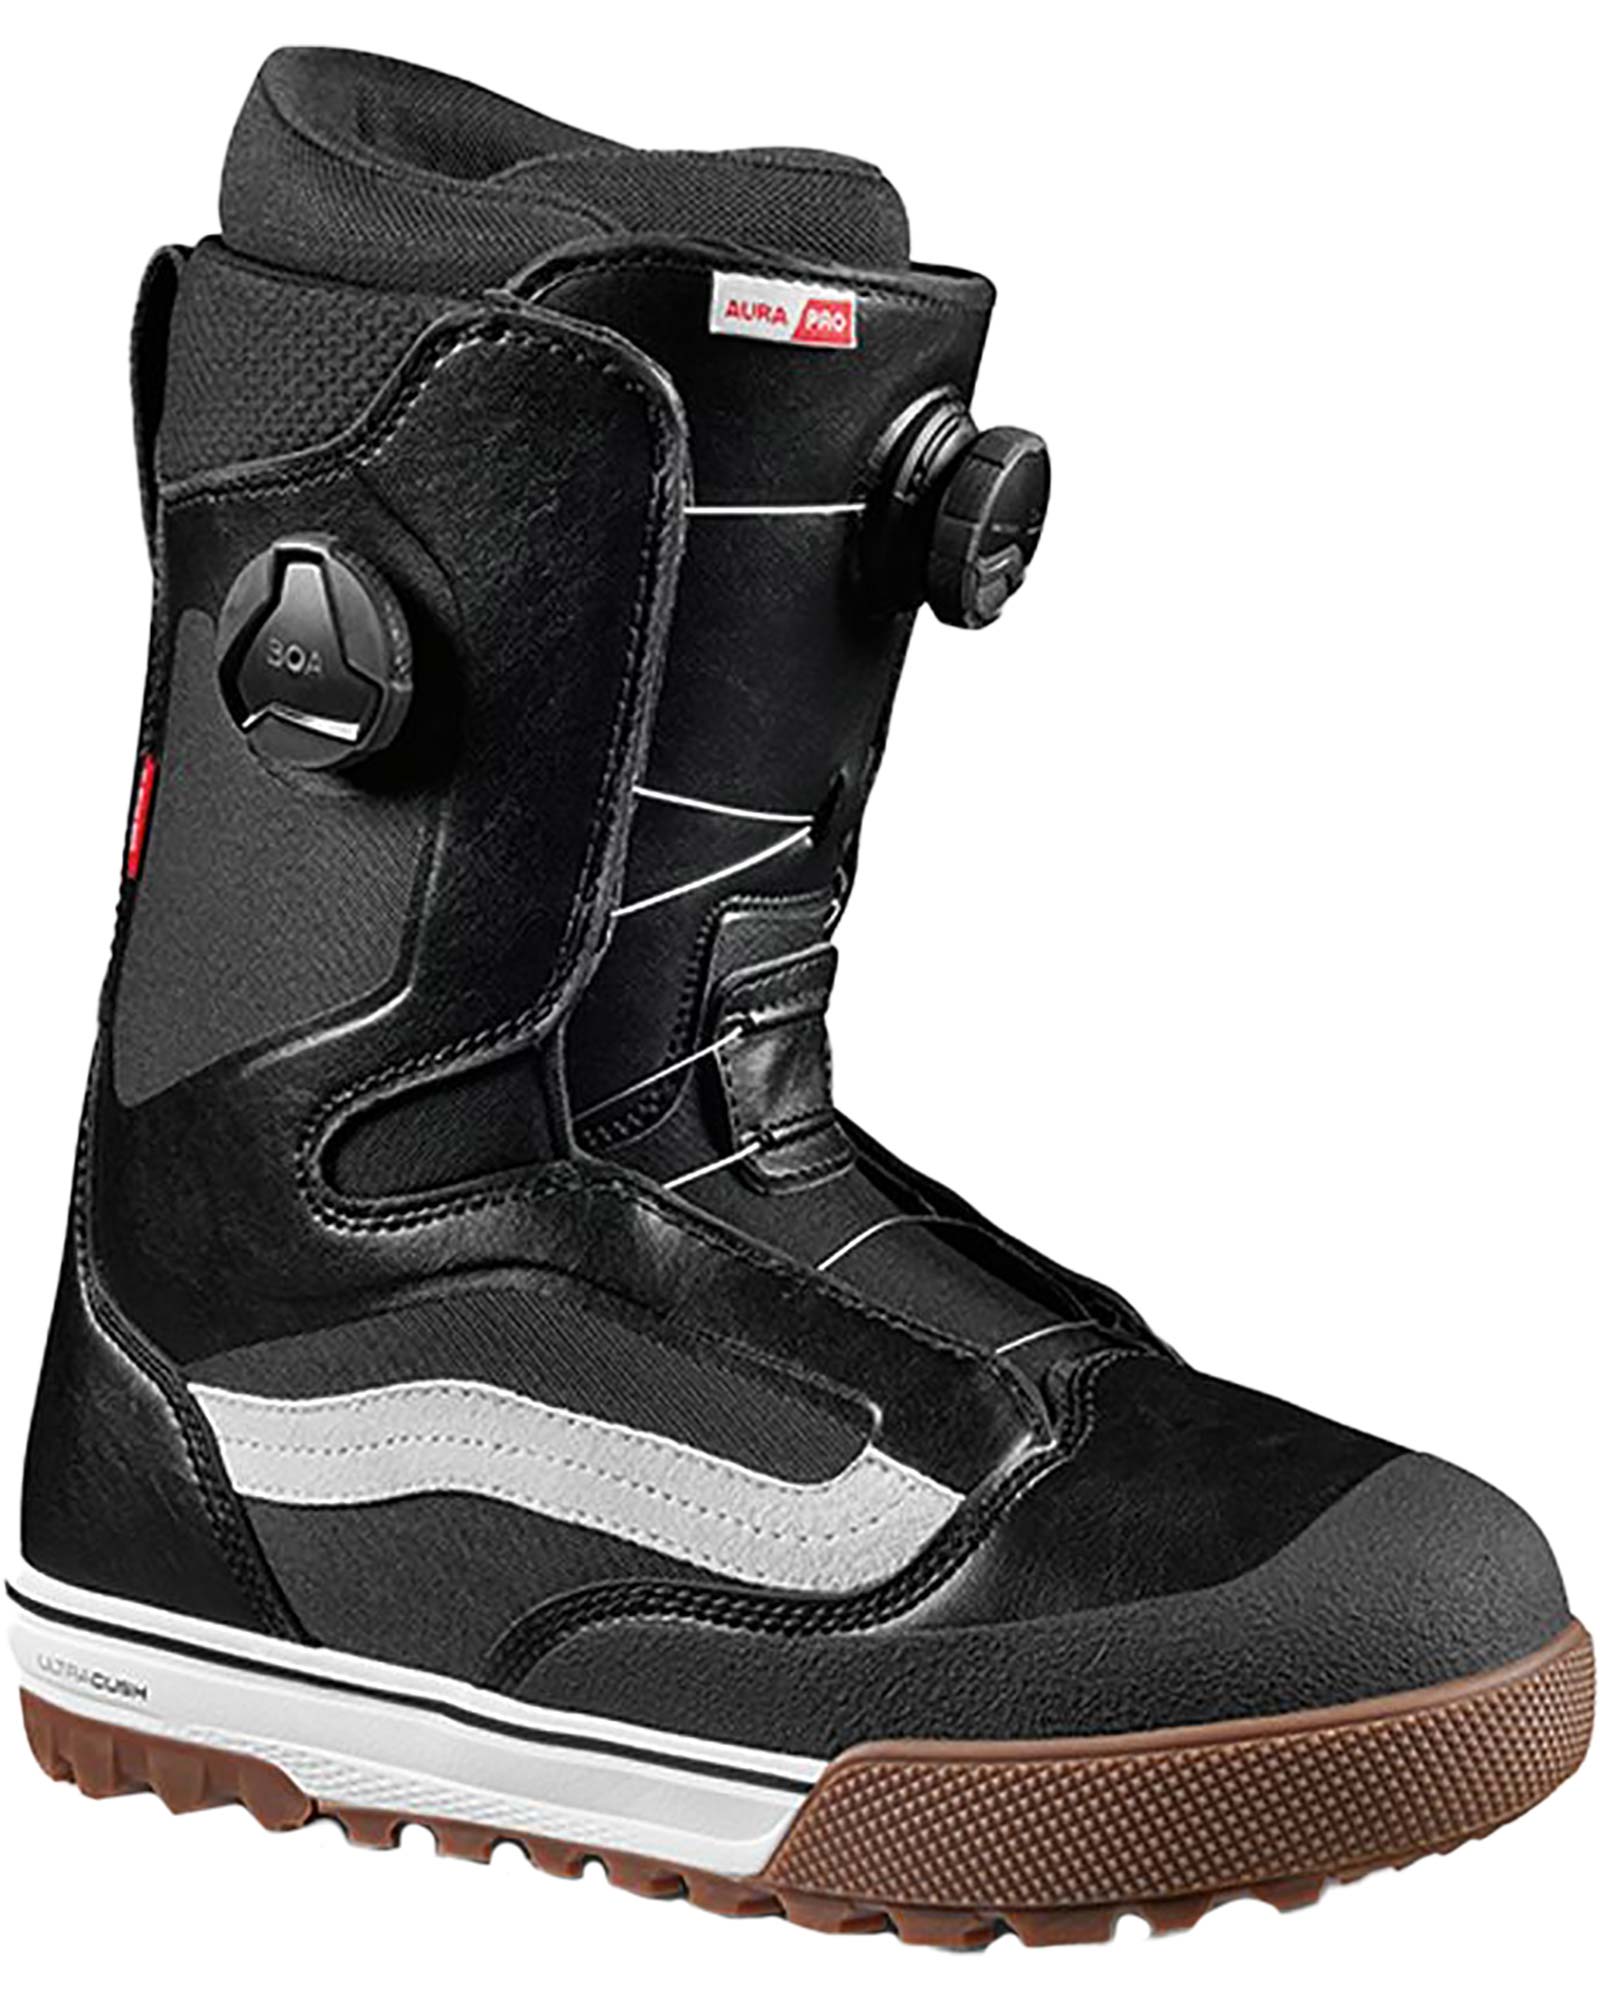 Vans Men's Aura Pro Snowboard Boots